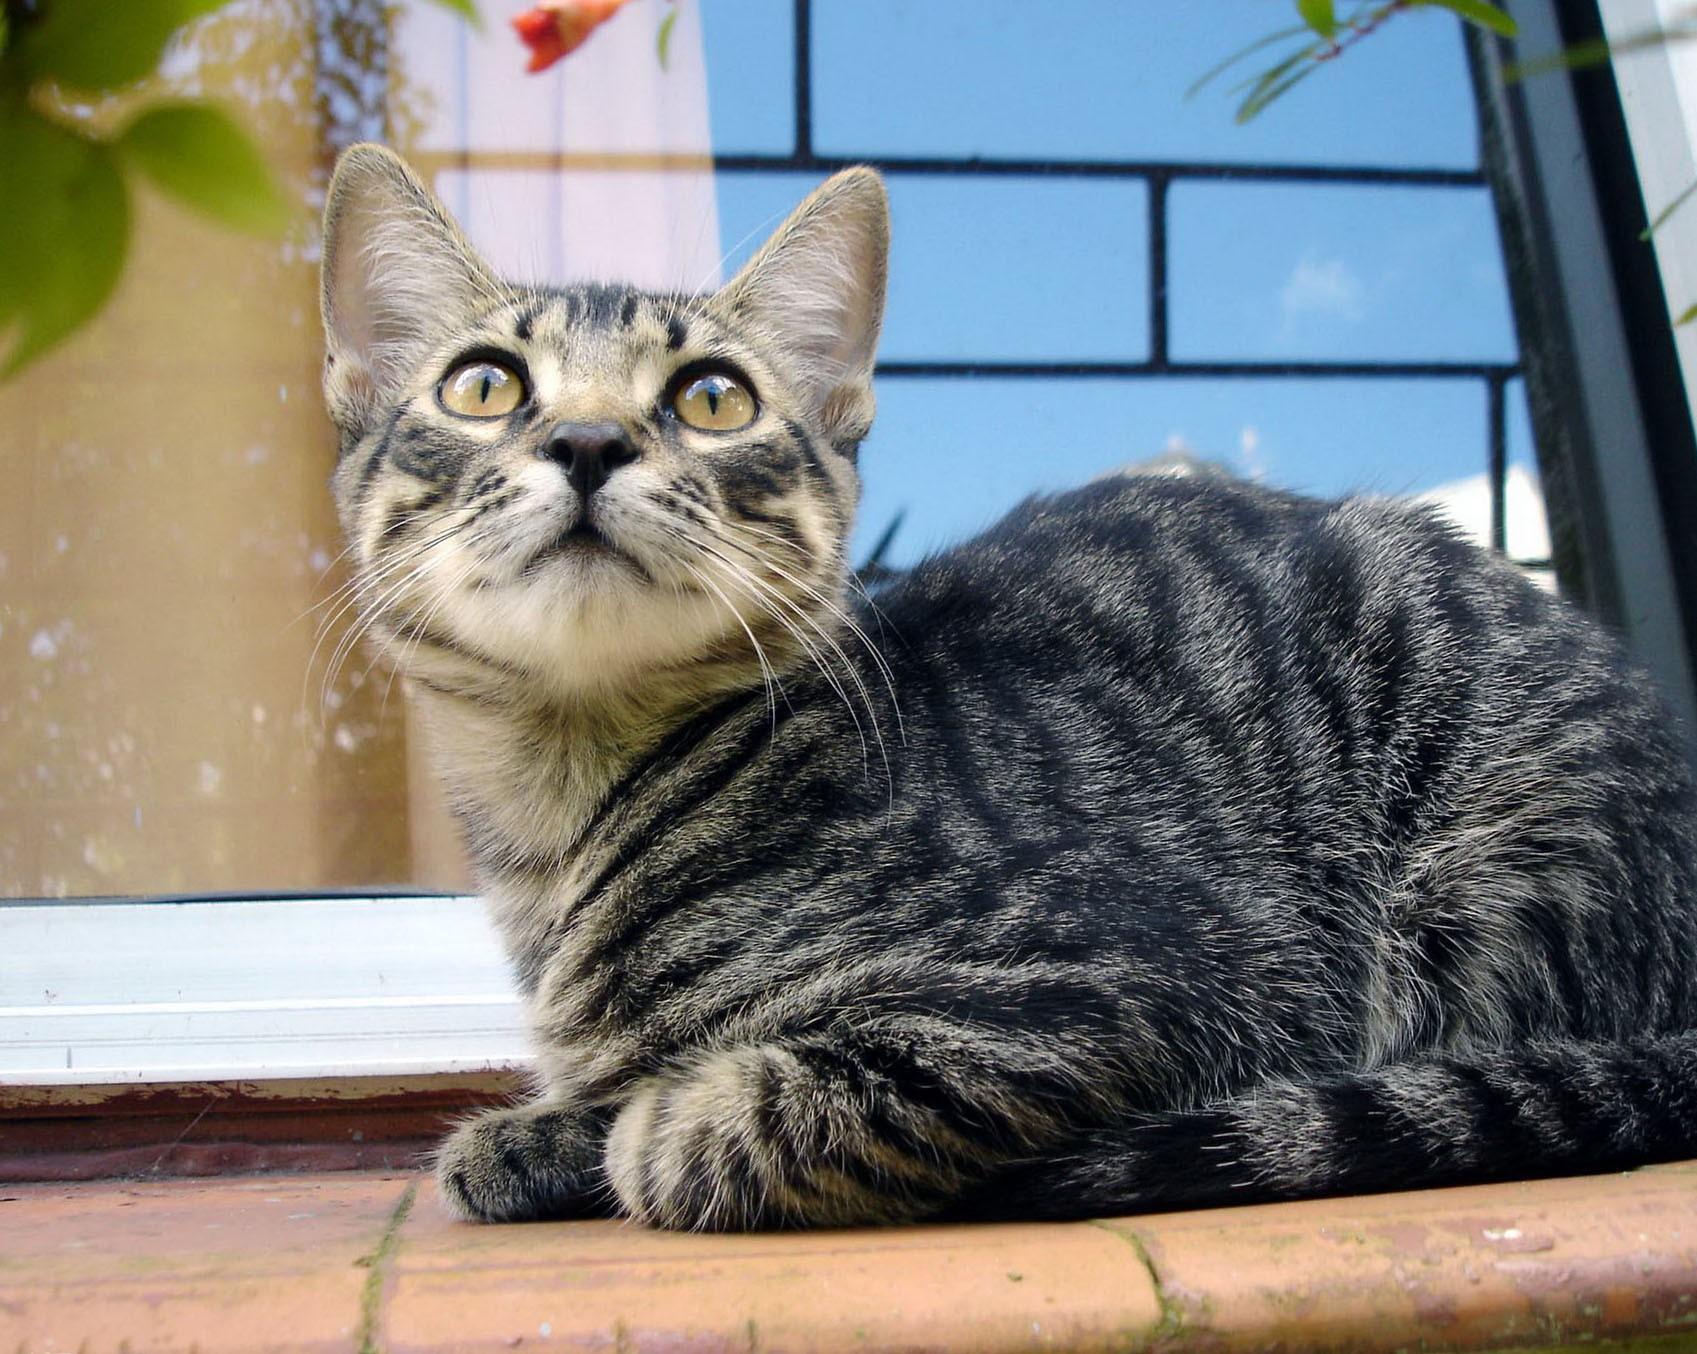 HD Cat Image, Animal Photo, Kitty, Cute Cat Wallpaper